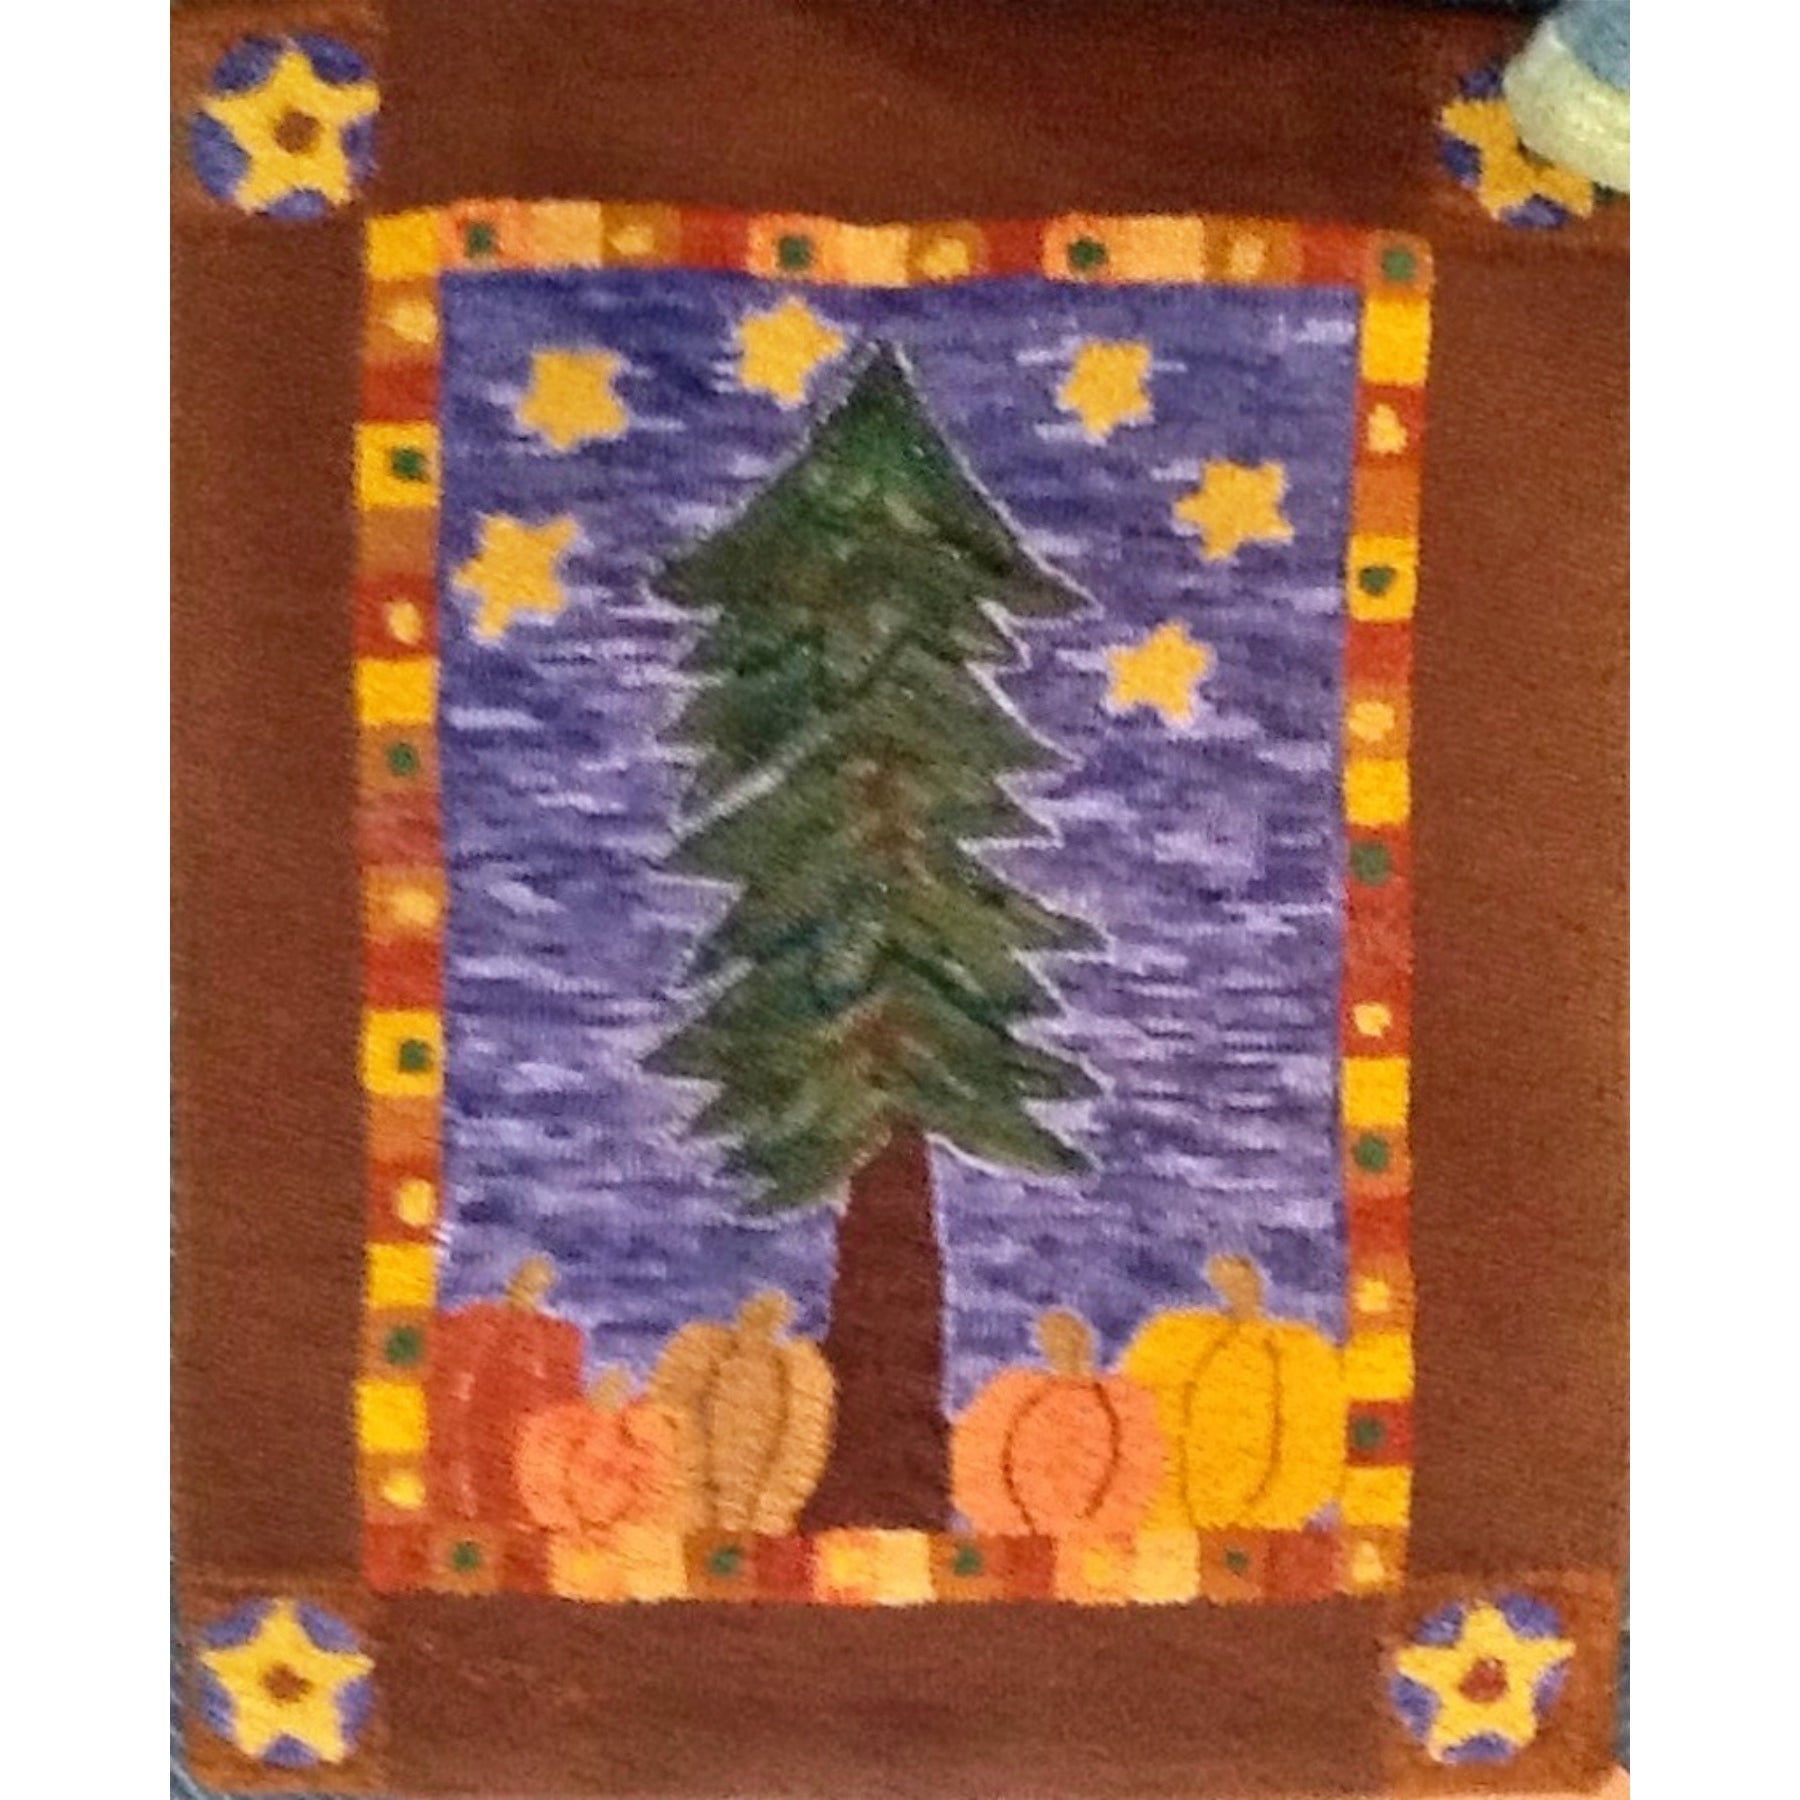 Merry Pumpkin, rug hooked by Kathy Kovaric